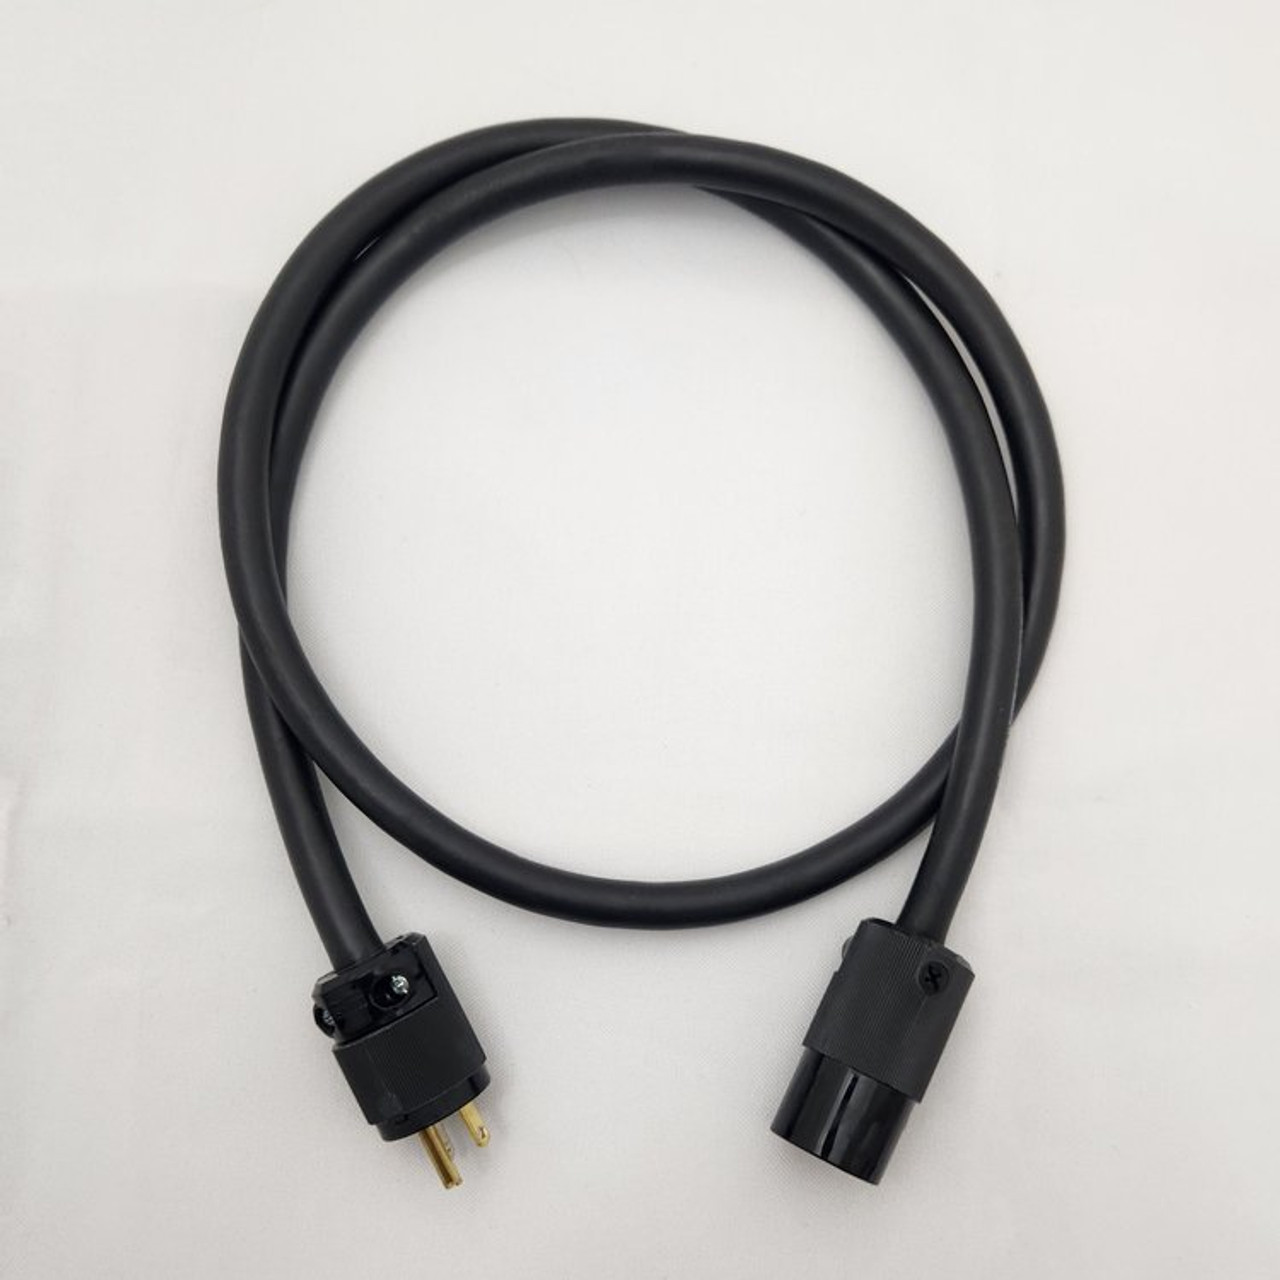 PlugsPlus 15 Foot Straight Blade / Edison / NEMA 5-15 Extension Cable (X15SB15)